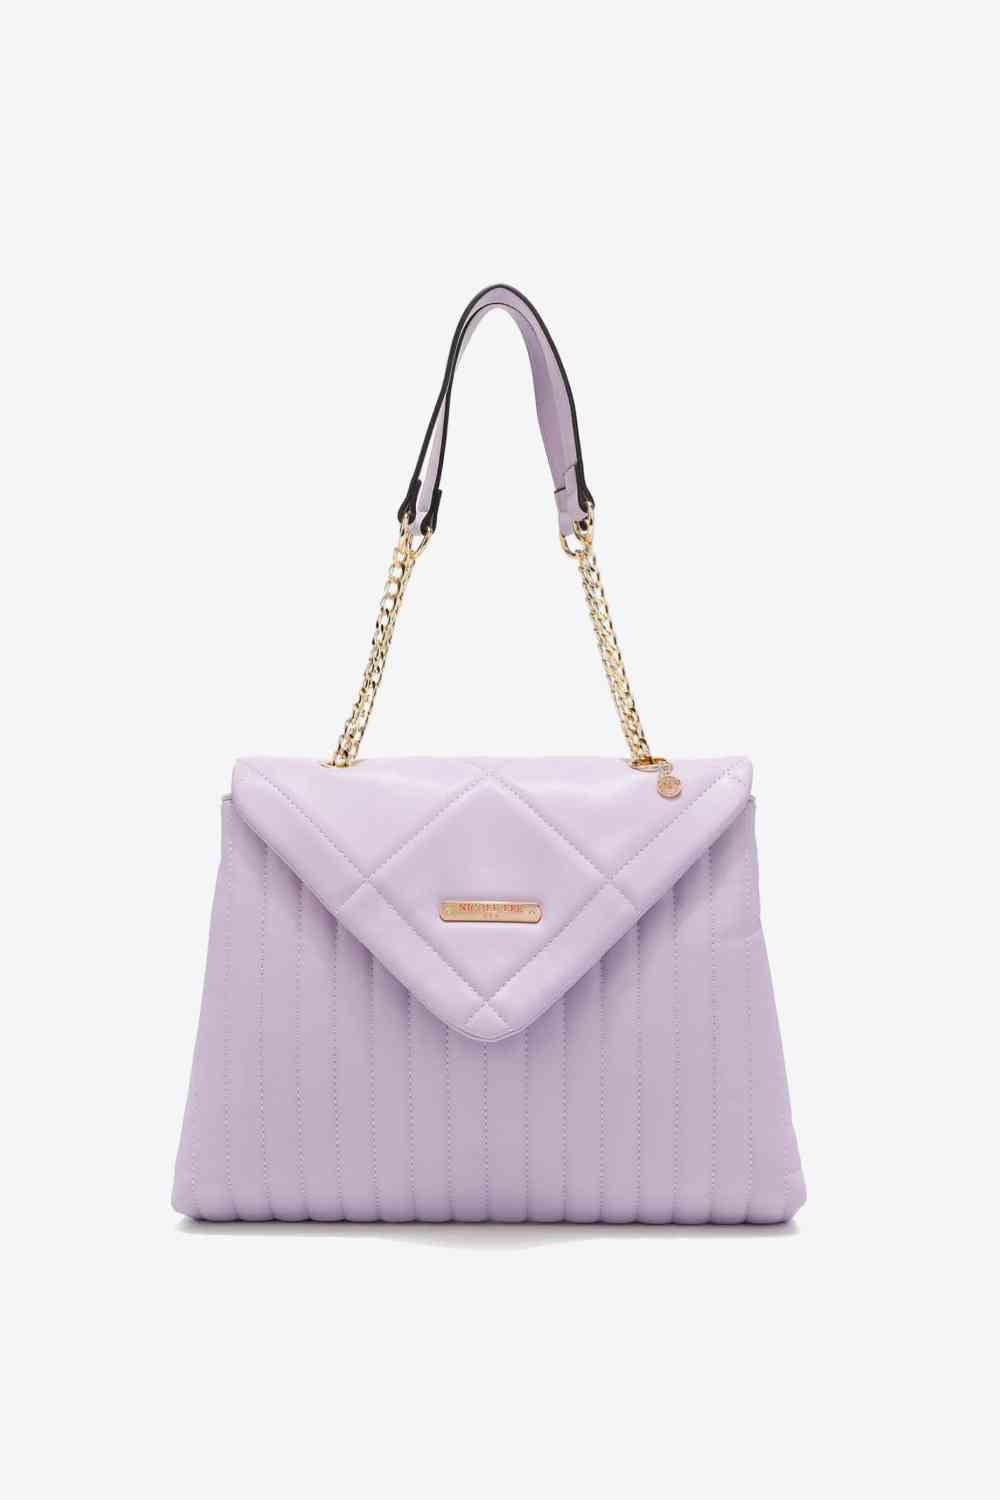 Nicole Lee USA A Nice Touch Handbag Lavender One Size